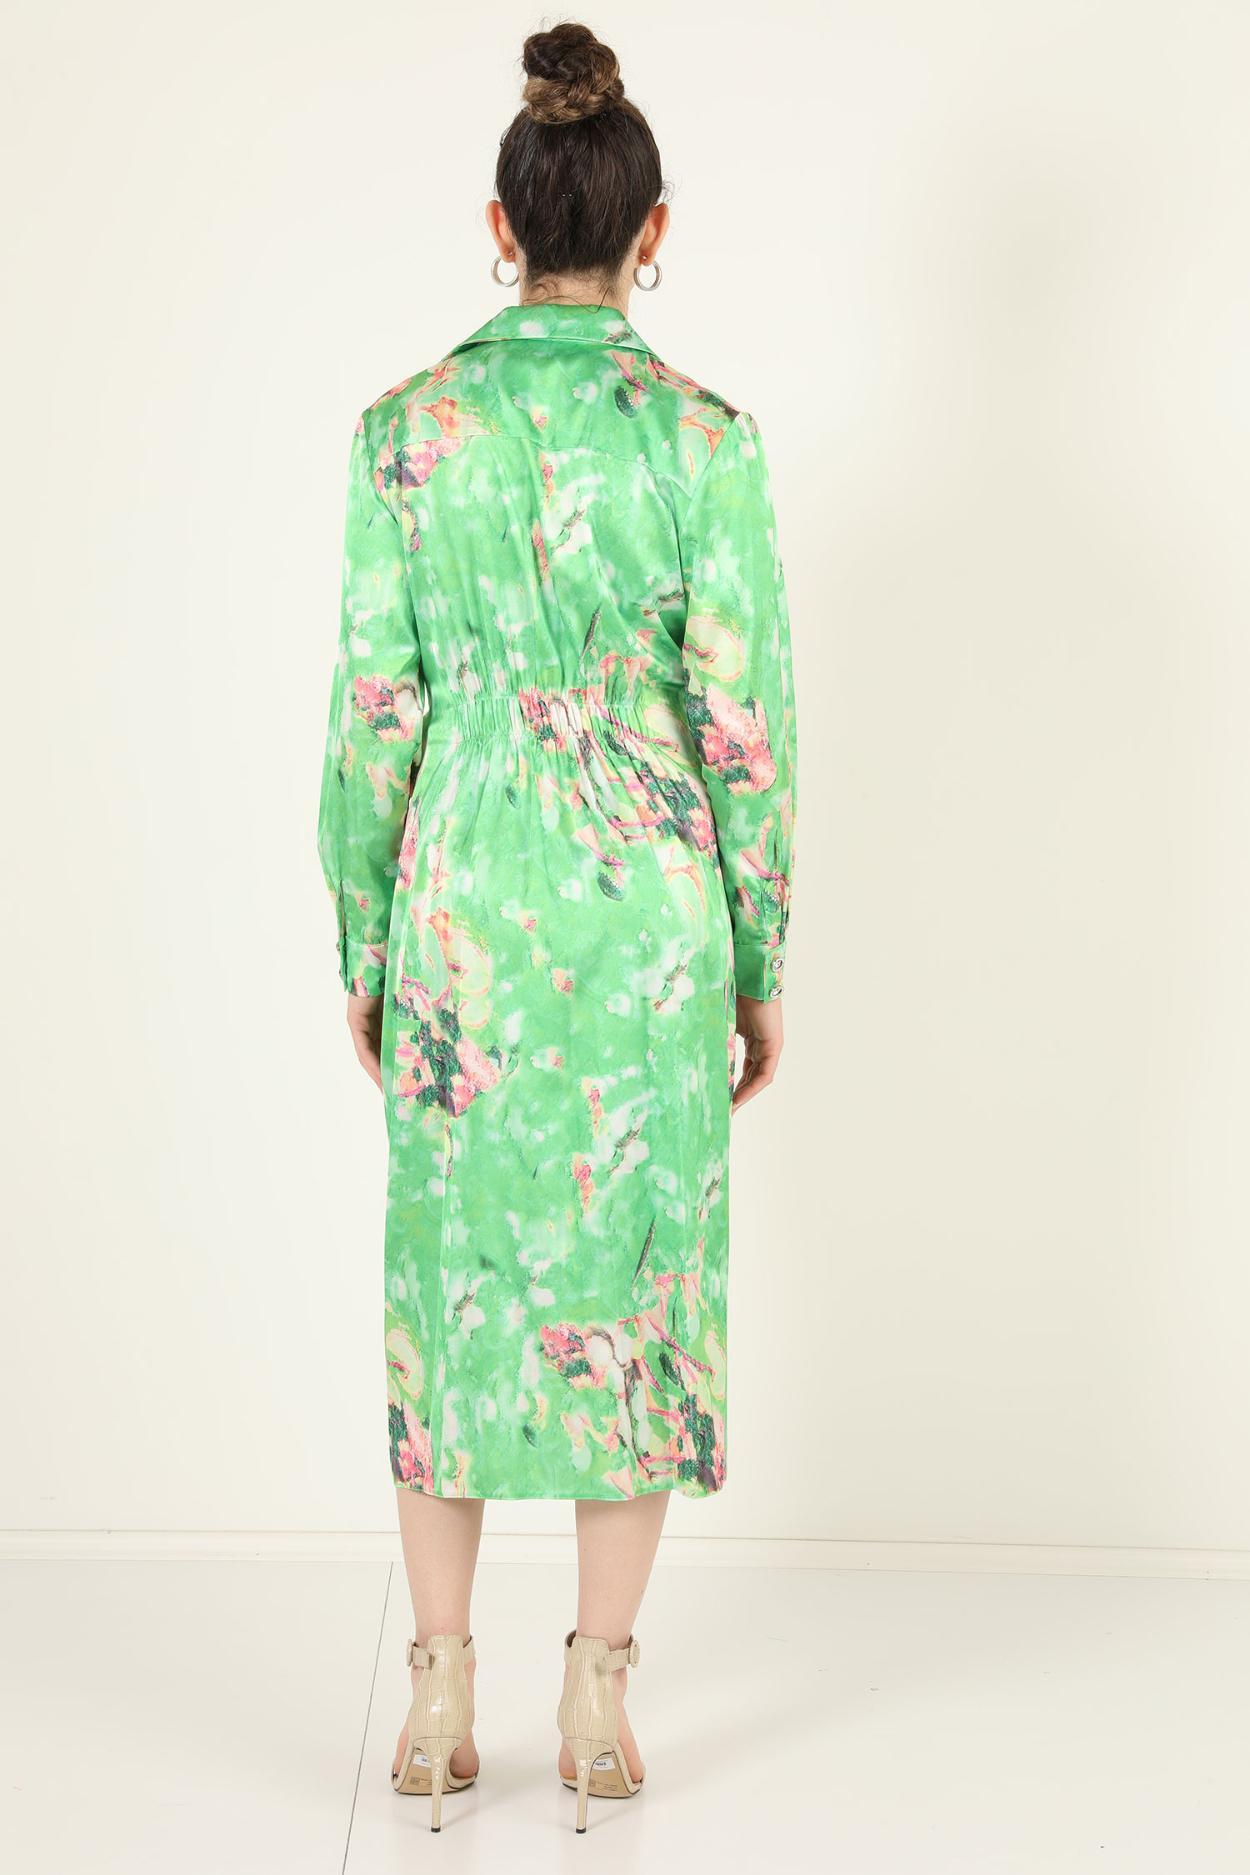 Lasagrada Casual Dresses|Fimkastore.com: Online Shopping Wholesale ...